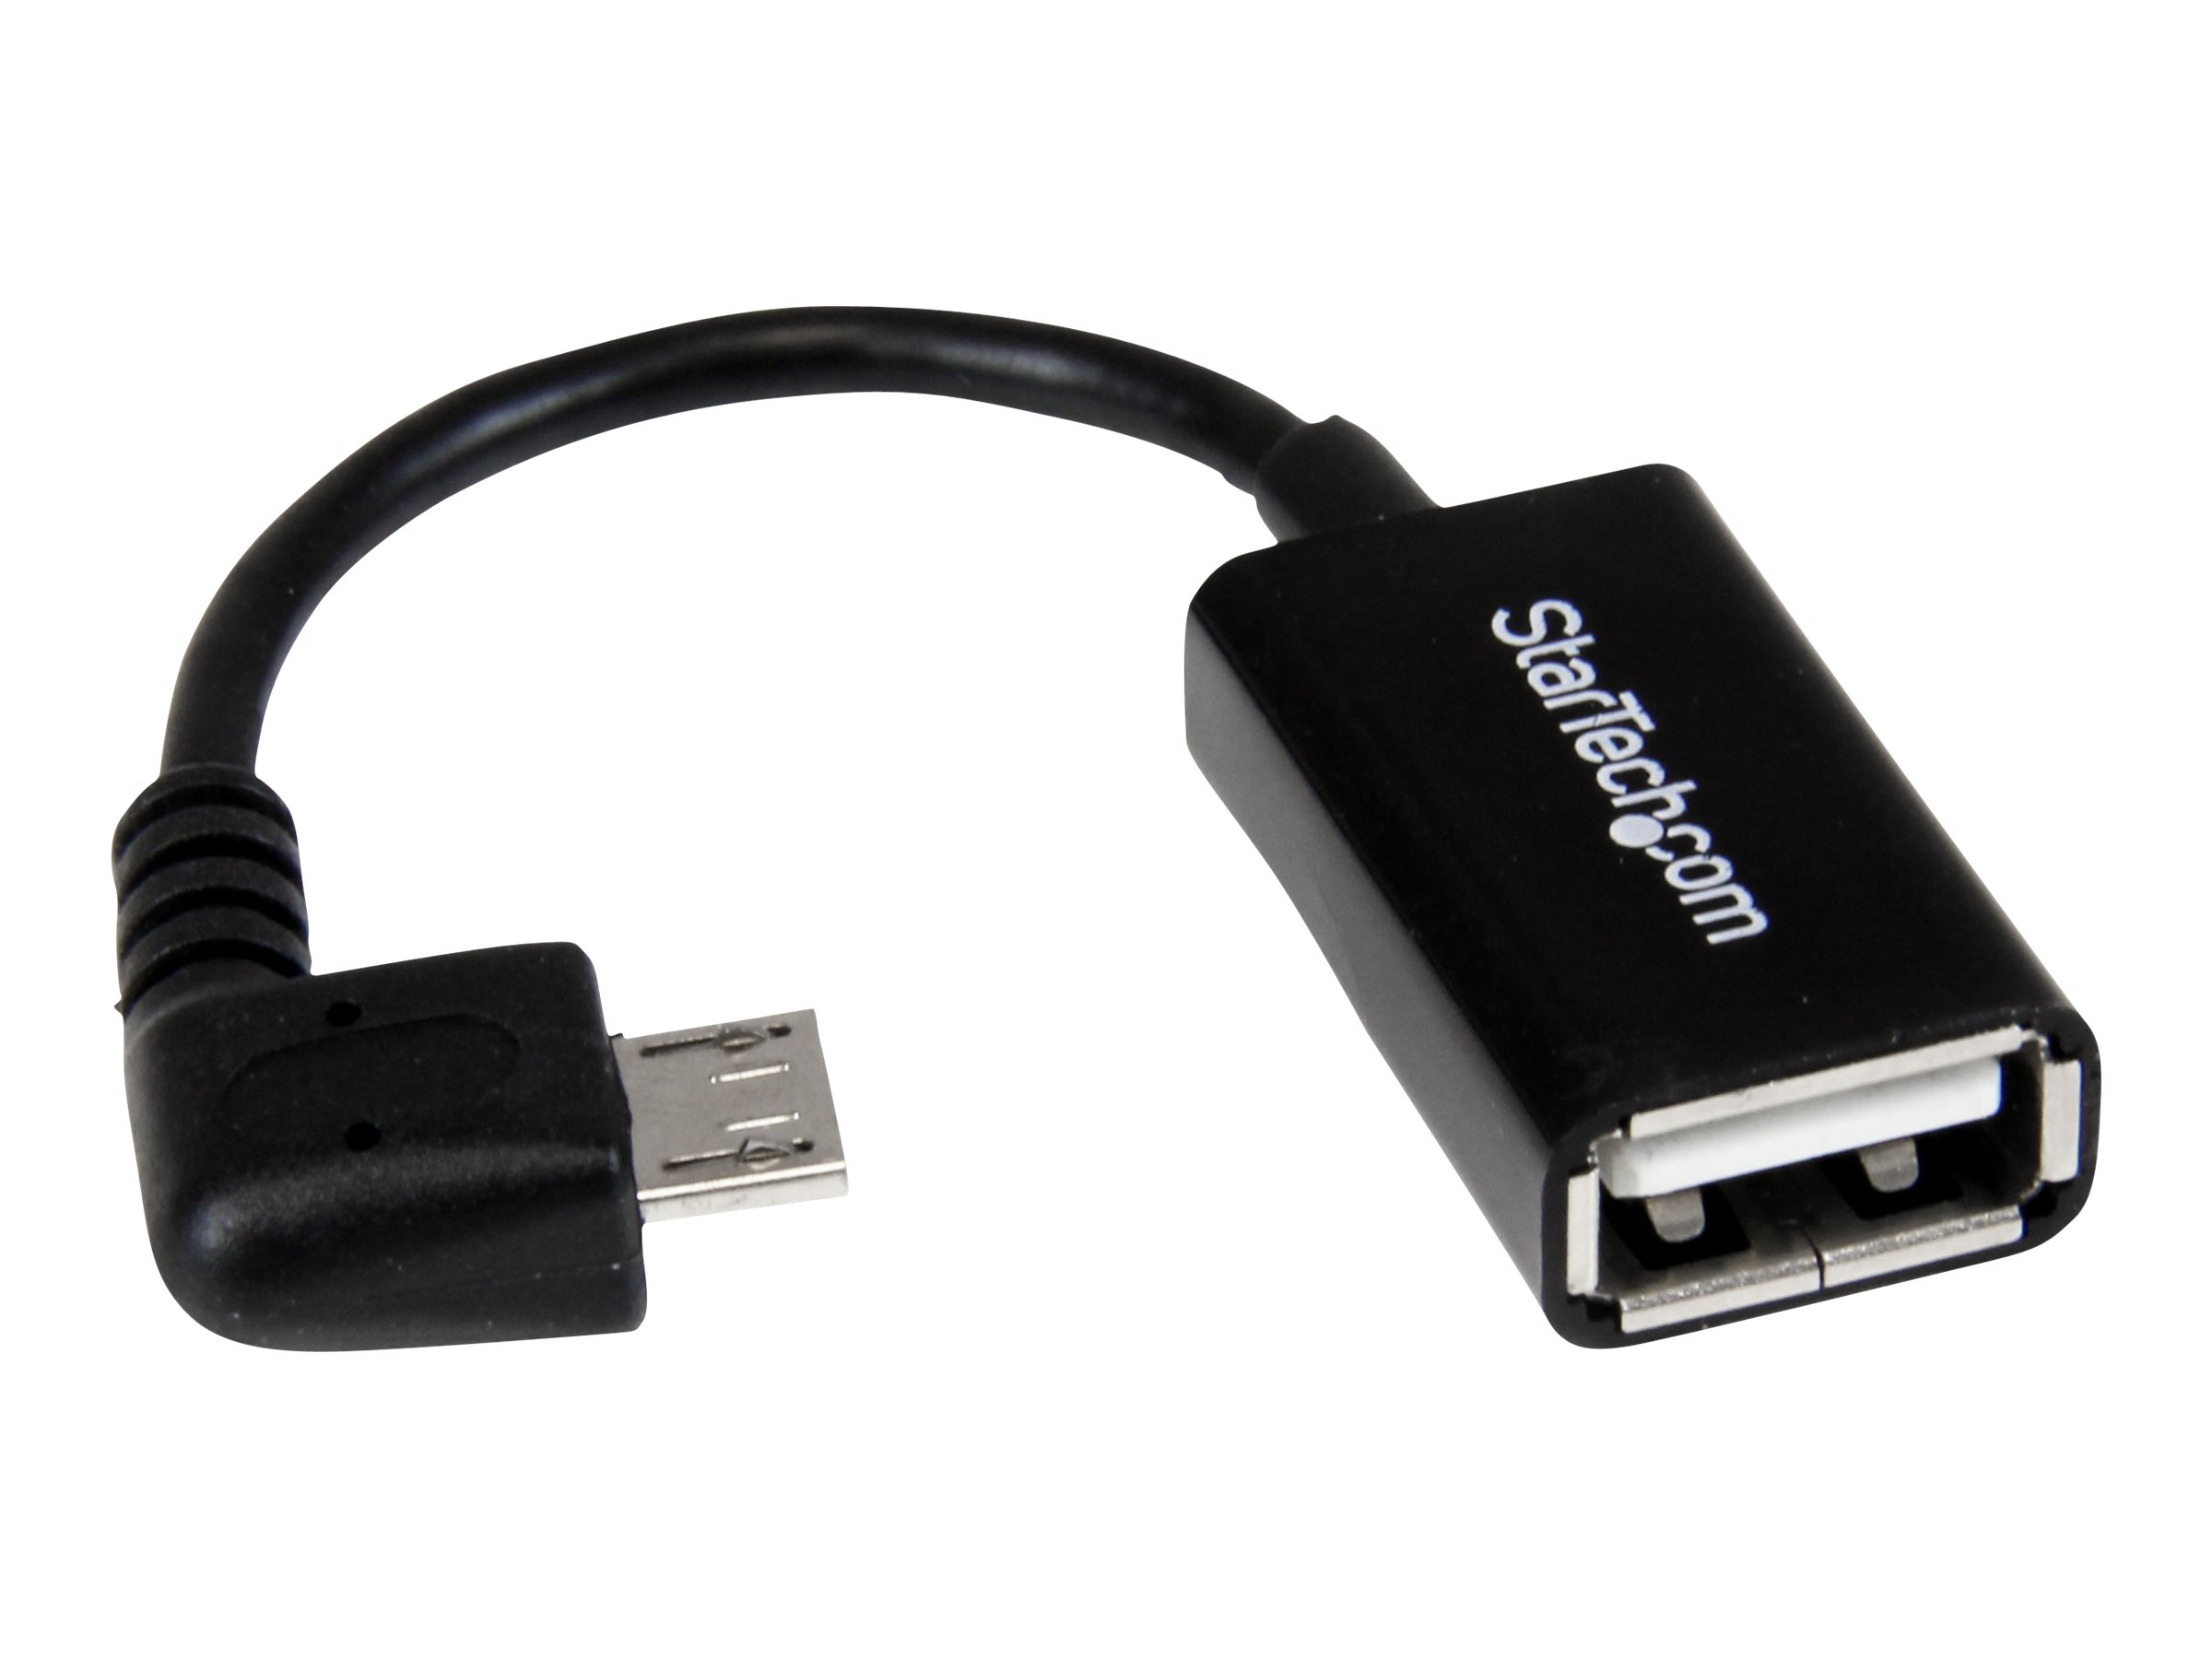 StarTech.com Micro USB rechts gewinkelt auf USB OTG Adapter Stecker / Buchse - Micro USB zu USB Kabel 12cm - On The Go Kabel - Schwarz - USB-Adapter - USB (W) zu Micro-USB Typ B (M)